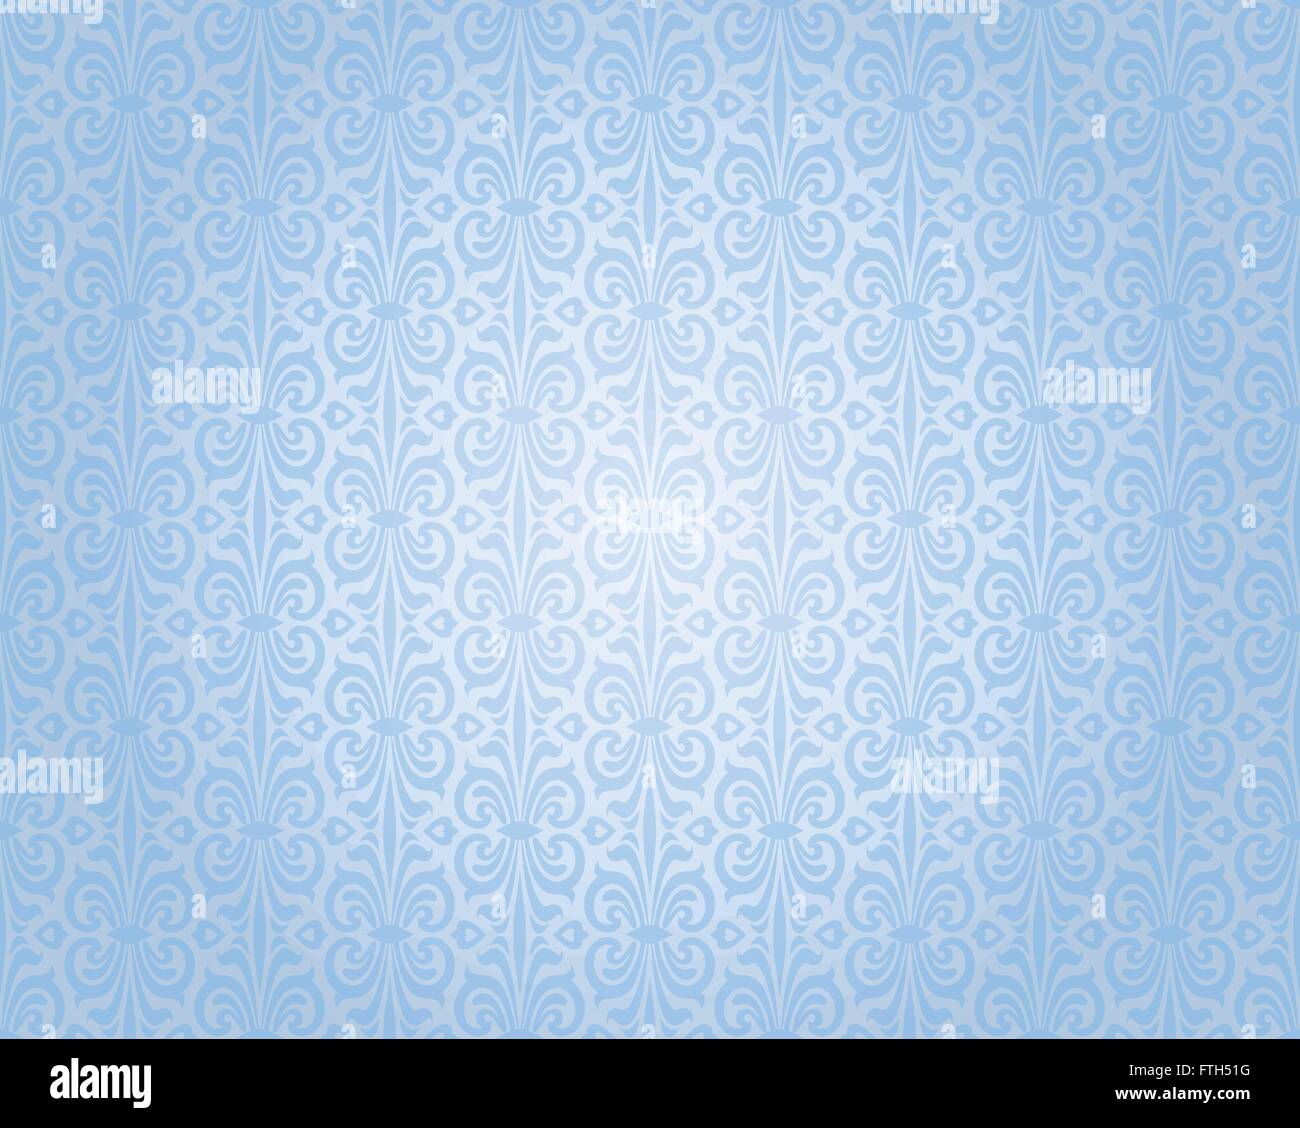 blue silver vintage wallpaper background repetitive pattern design Stock Vector